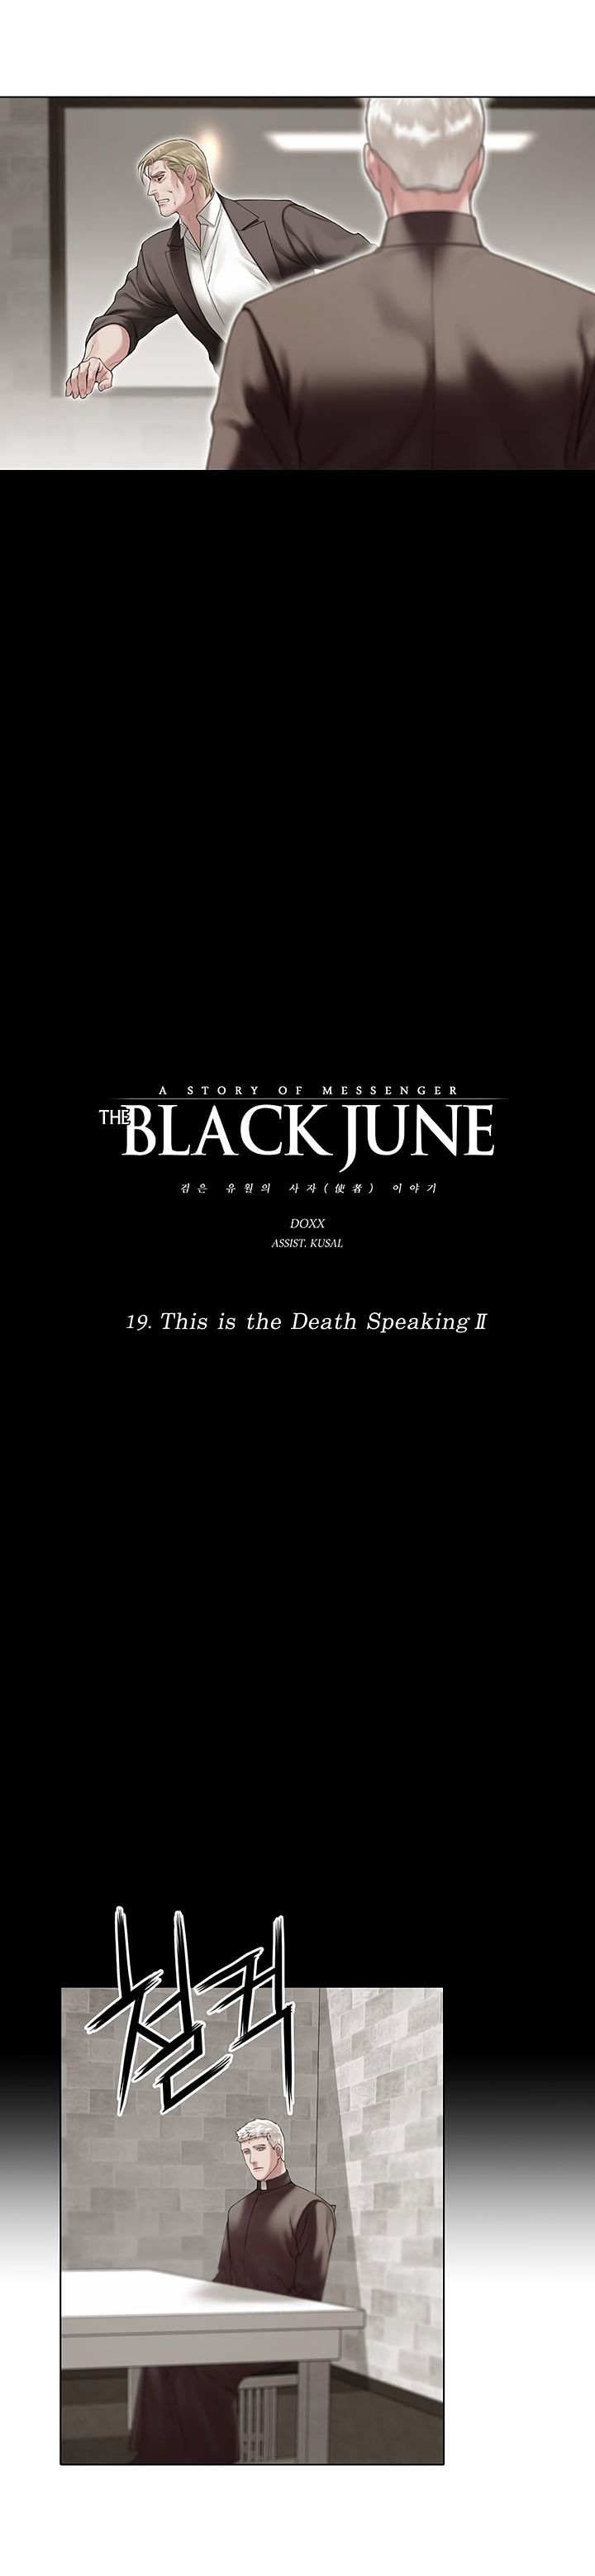 the_black_june_19_6